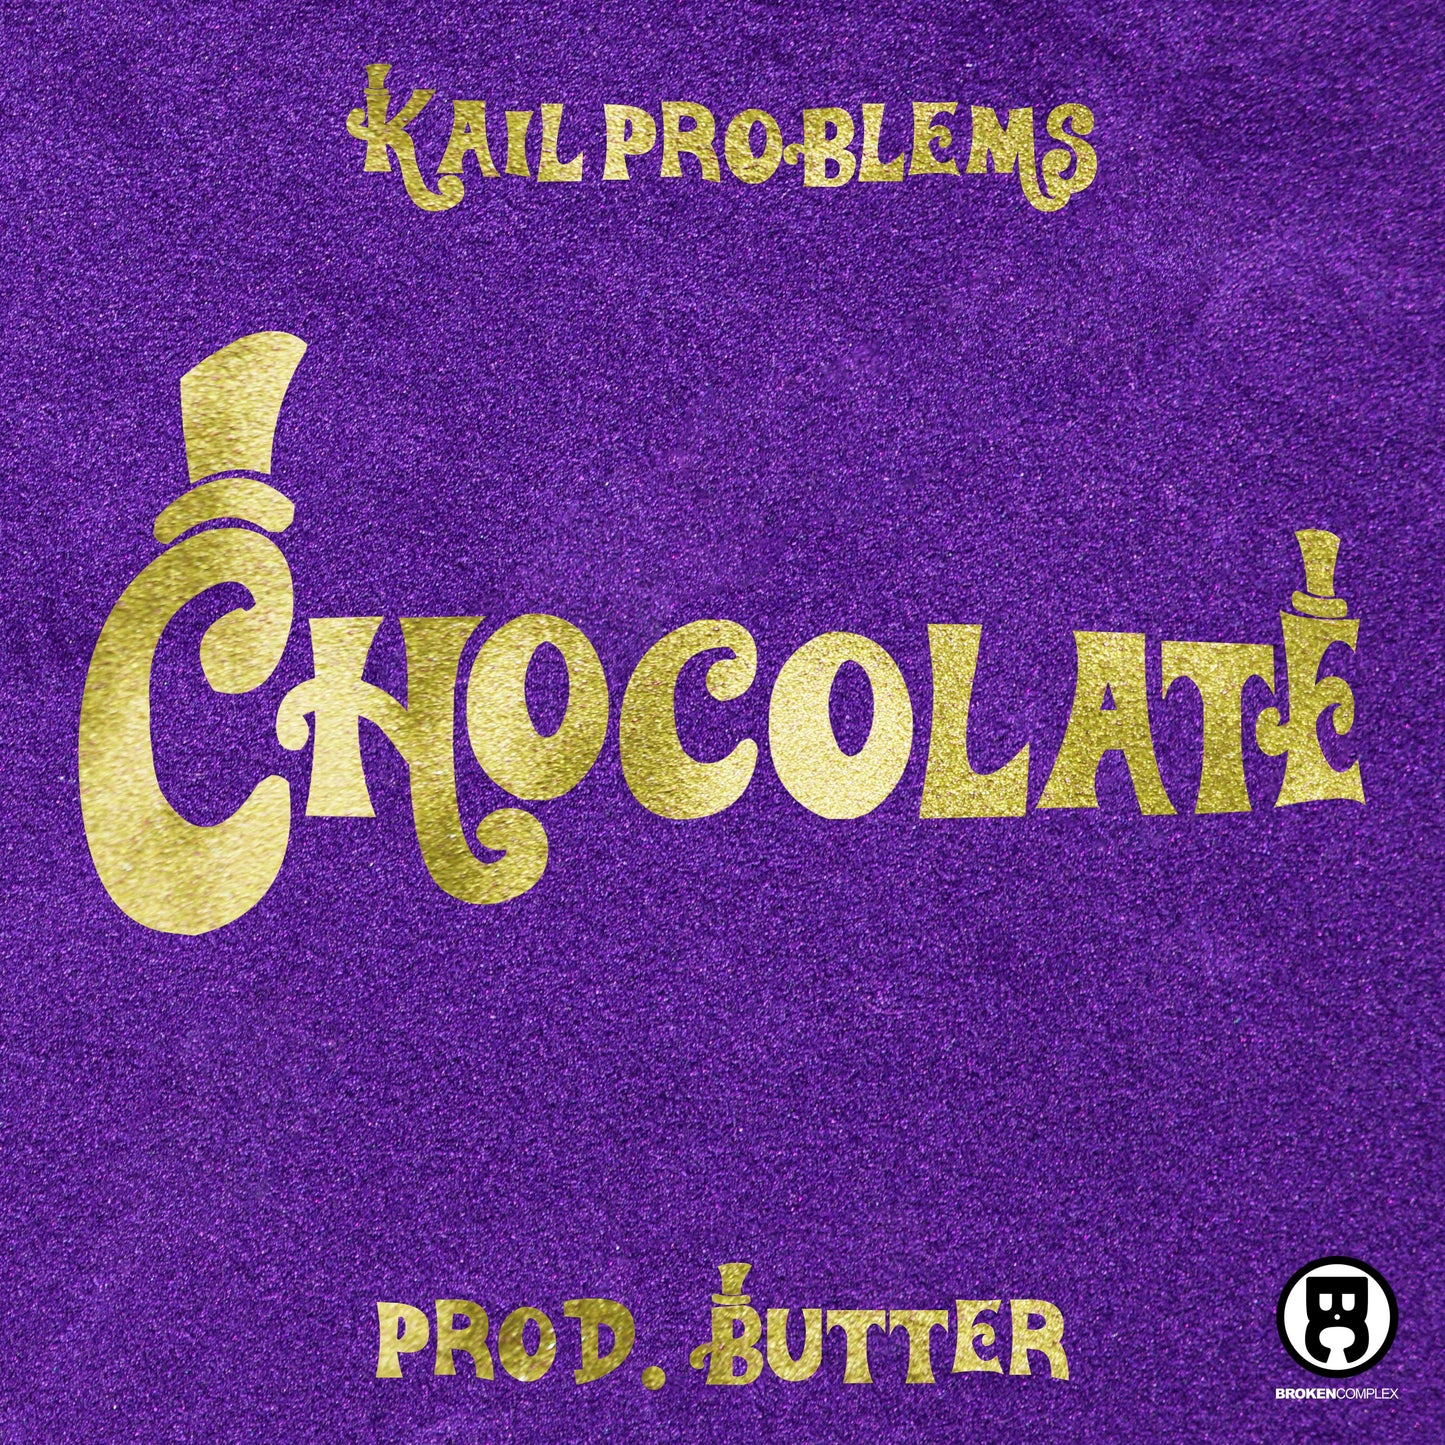 Chocolate (prod. Butter) (Single)